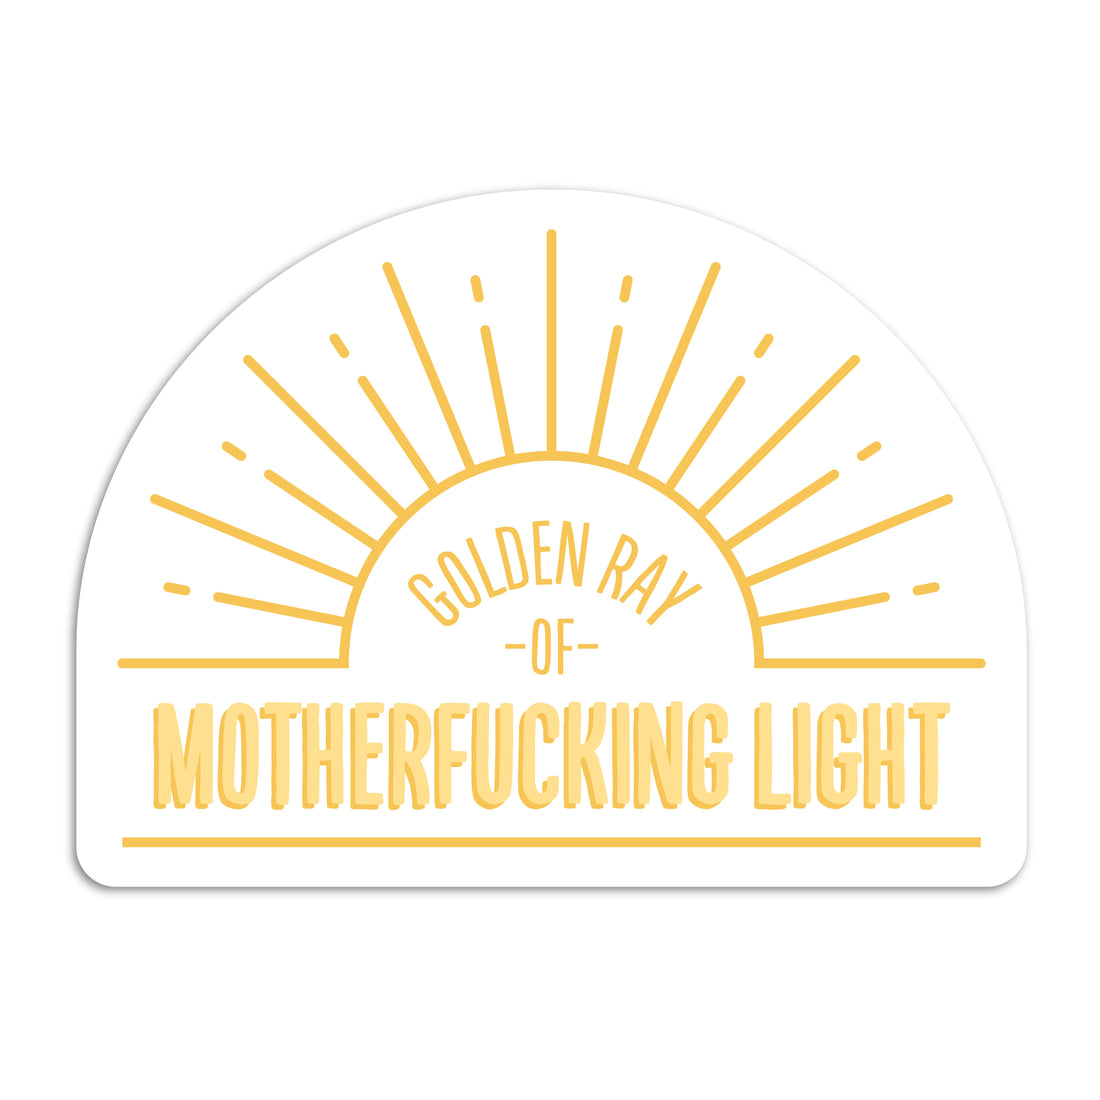 Golden ray of motherfucking light vinyl sticker by I&